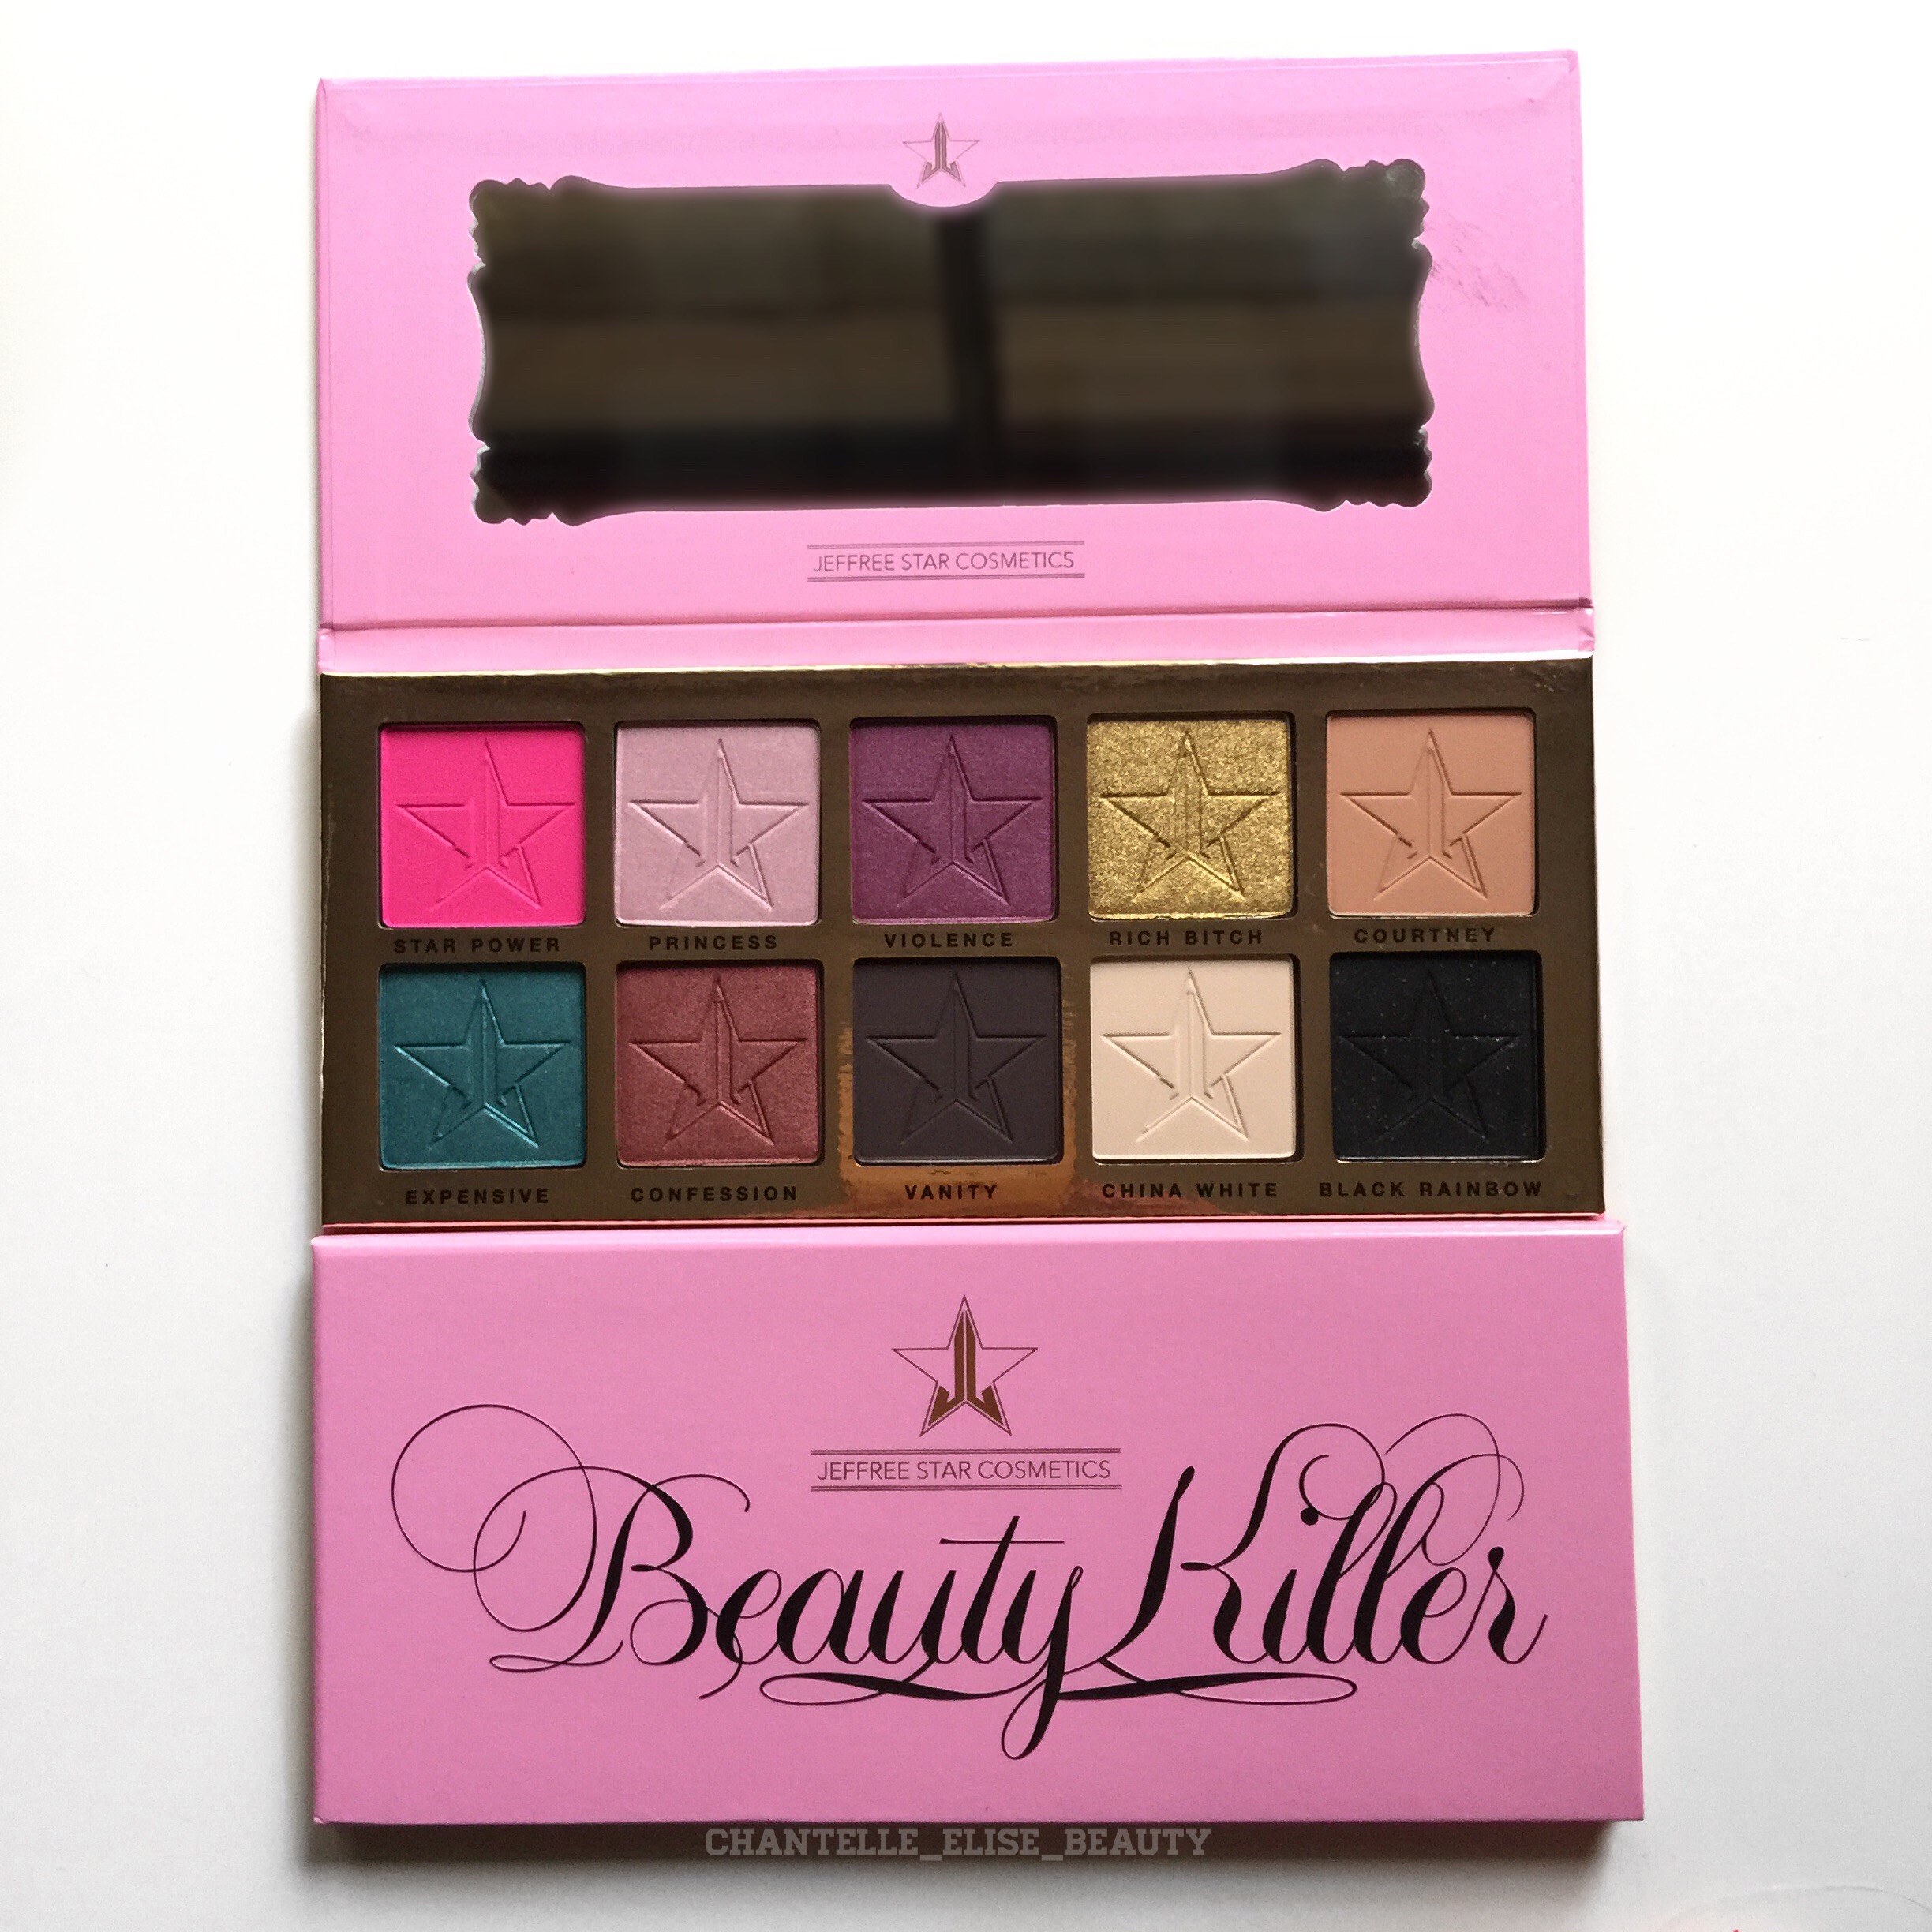 First Impressions – Jeffree Star Cosmetics Beauty Killer eyeshadow palette ...2448 x 2448